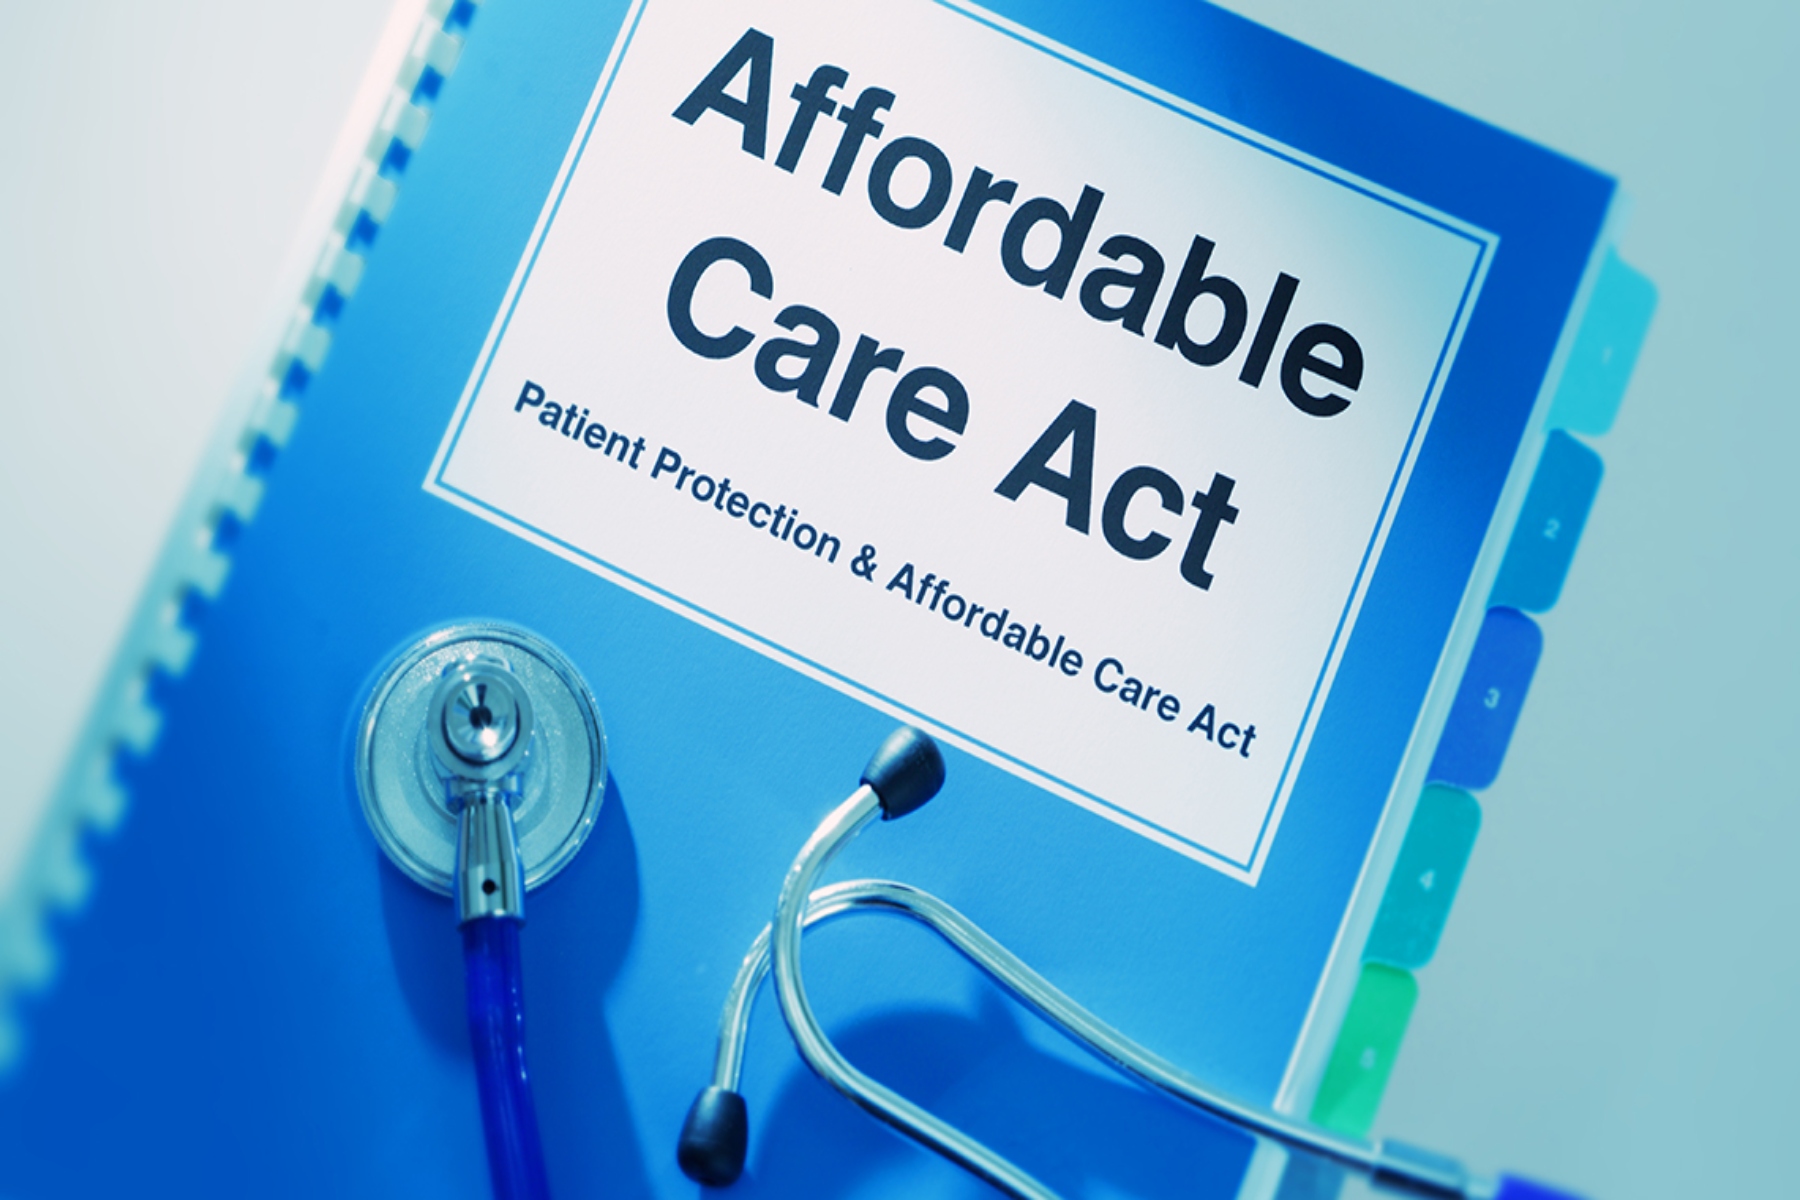 Affordable Care Act: Οι επεκτάσεις βελτίωσαν την πρόσβαση στη φροντίδα του καρκίνου